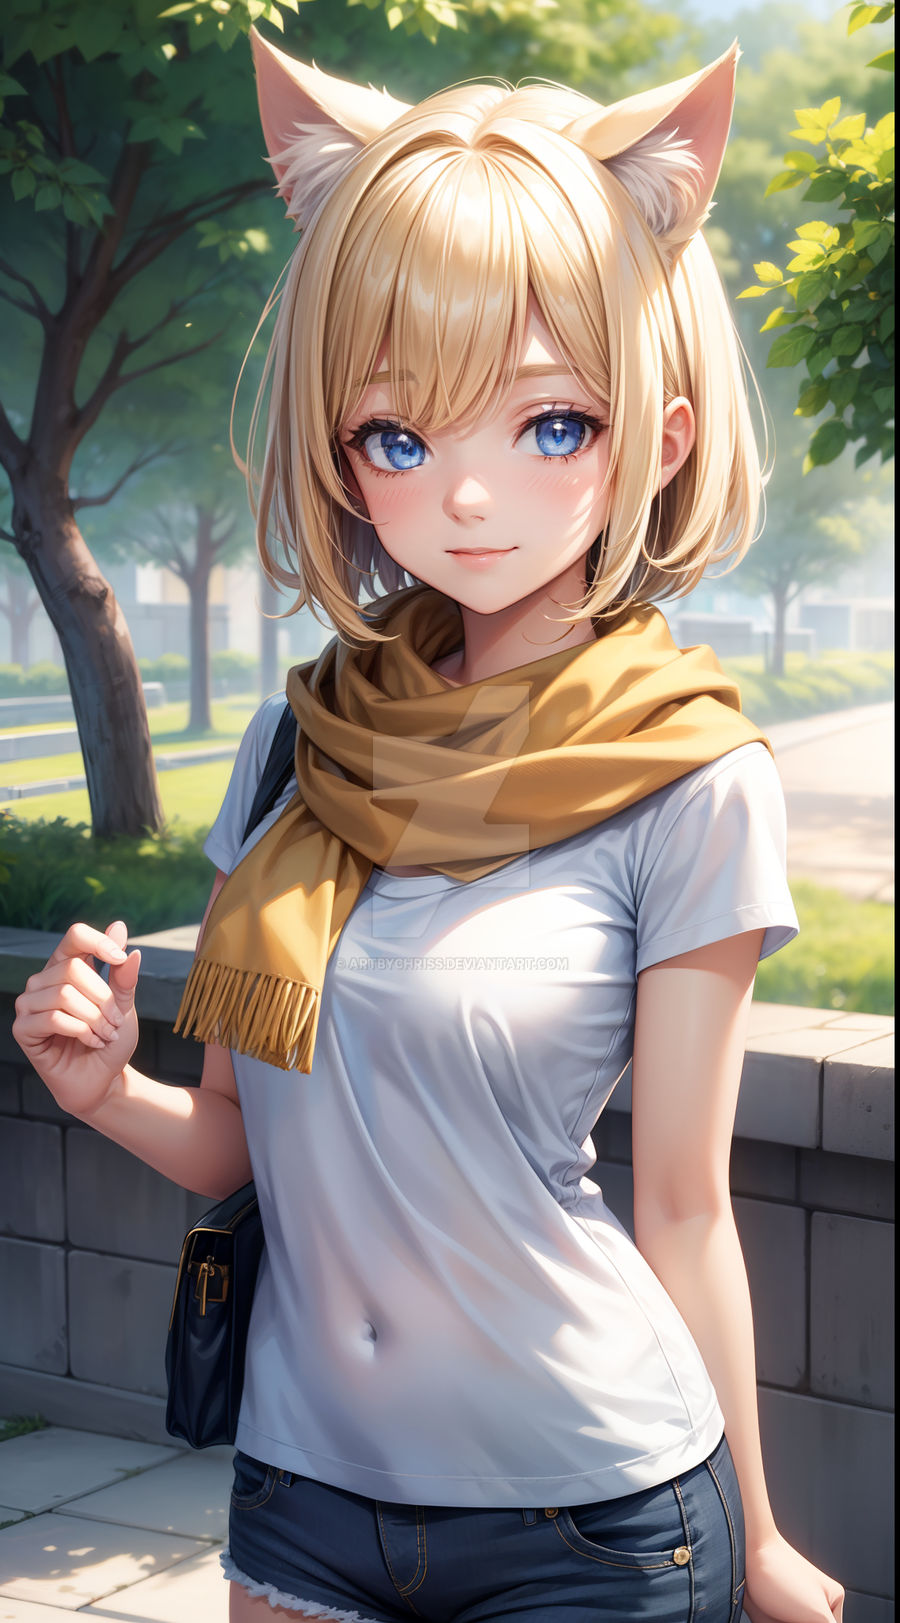 Cute Anime Girl pfp by RhasaArt on DeviantArt